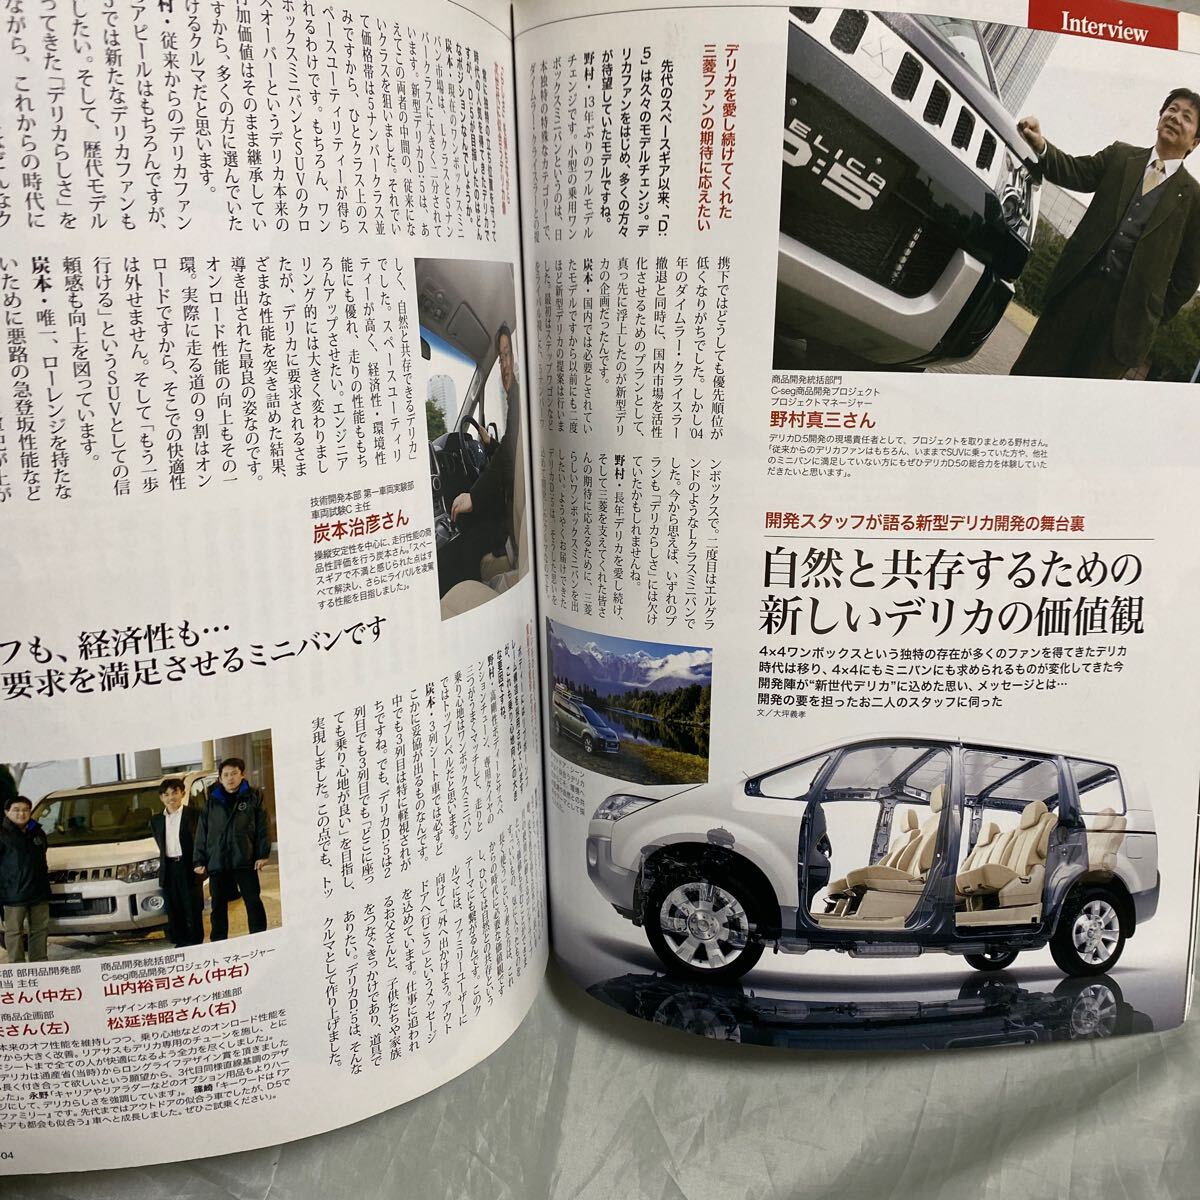 #4×4 журнал # новая модель Mitsubishi Delica D:5. серьезность раз #2007 год Париж ~ Dakar * Mitsubishi Pajero #2007 год 